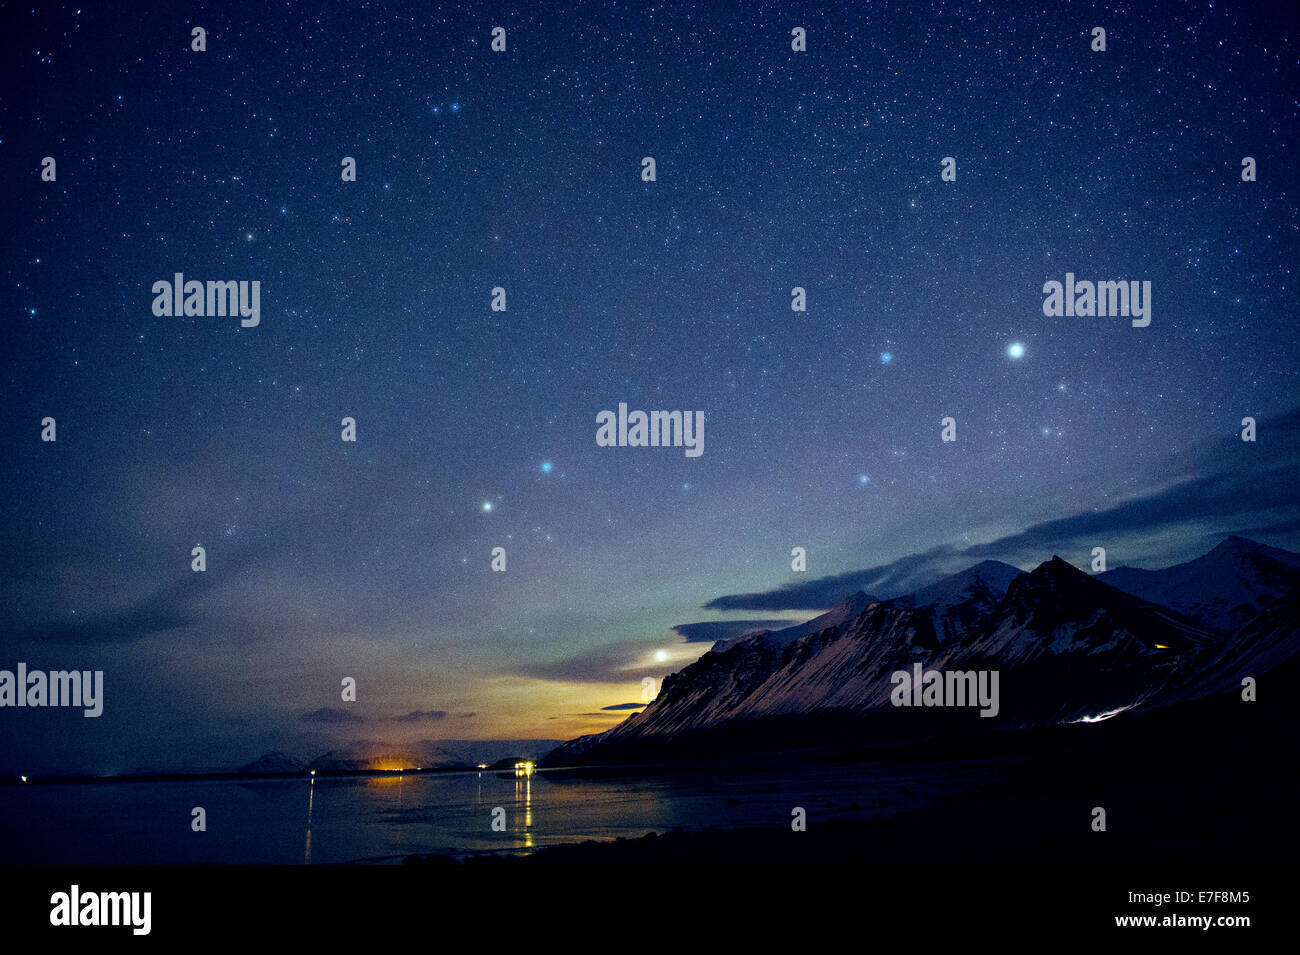 Starry sky over still ocean in arctic landscape Stock Photo